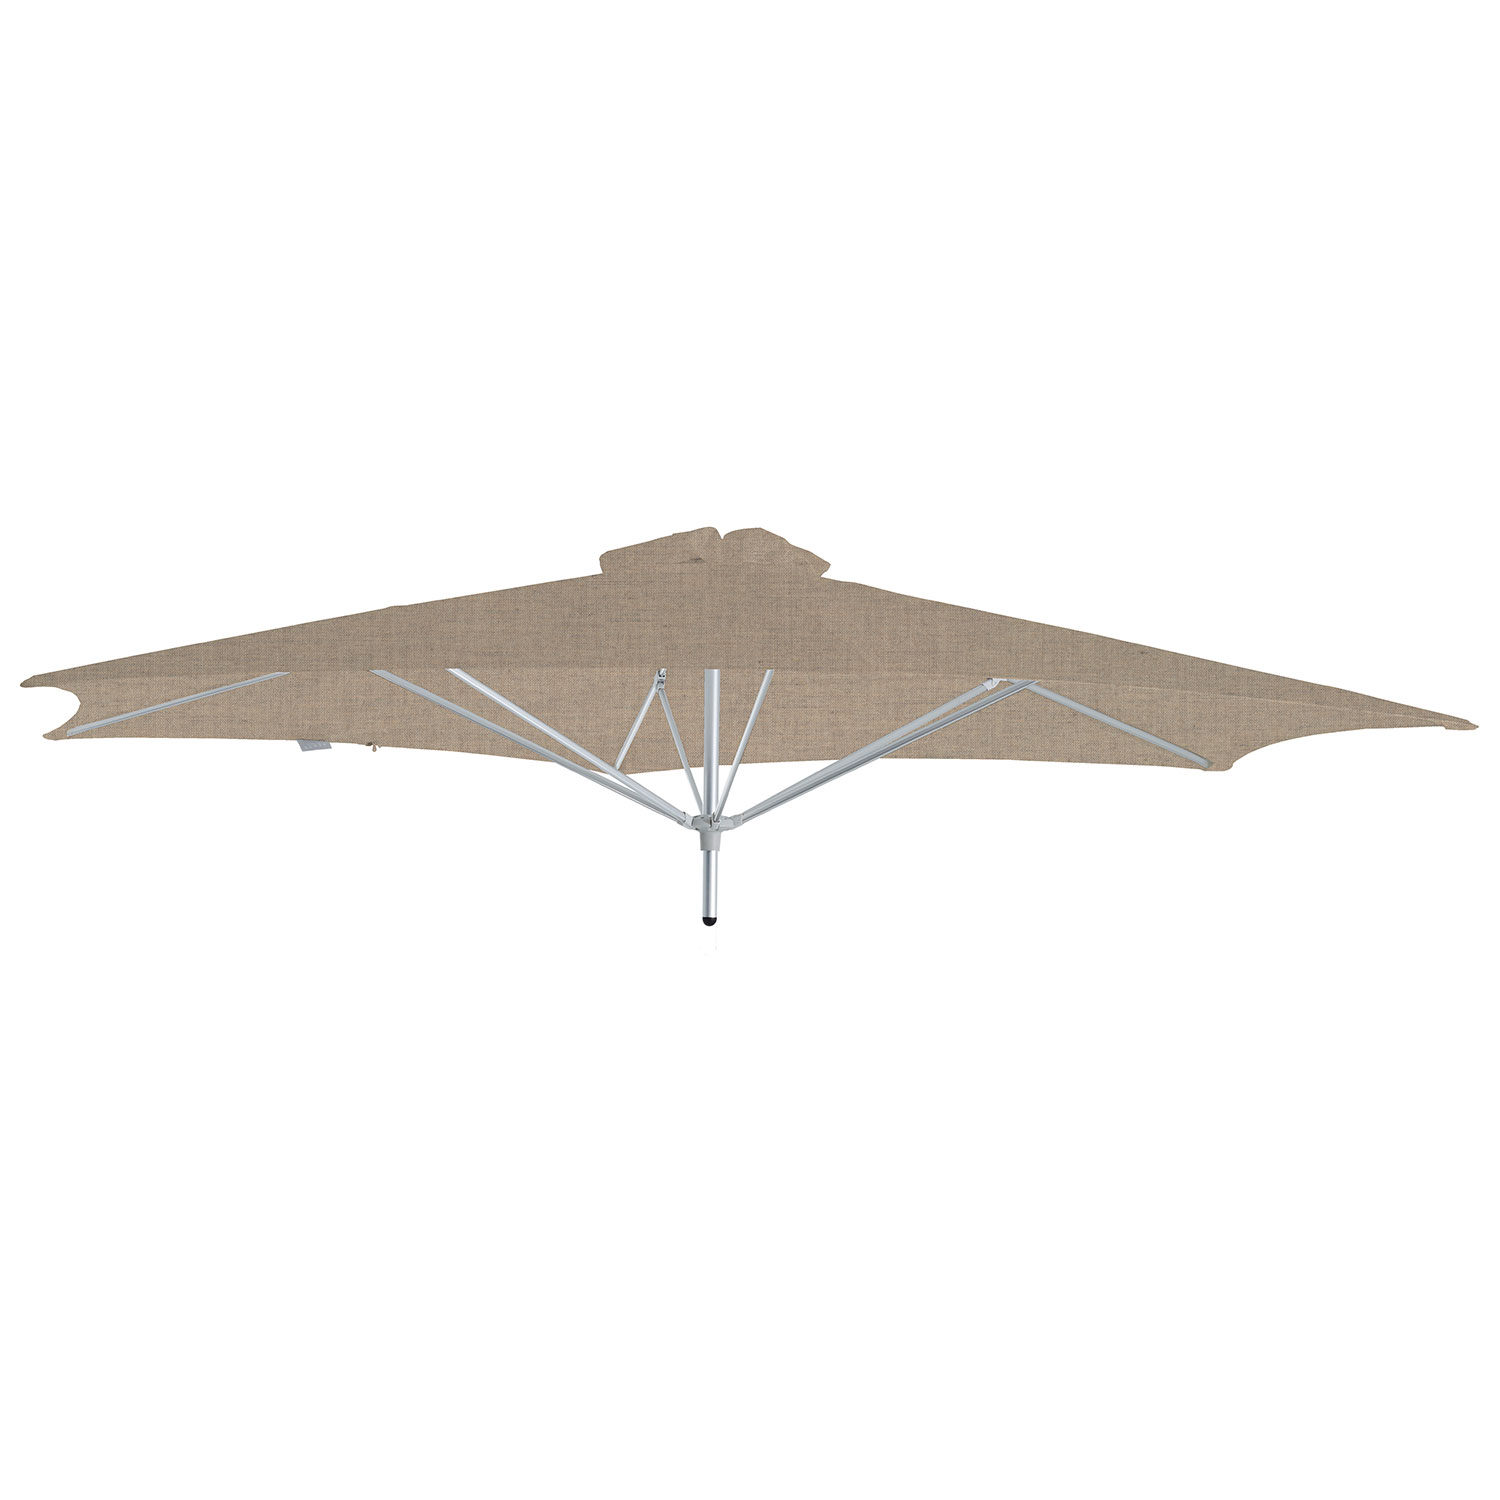 Paraflex Neo parasolkap 300cm - Sunbrella (Sand)